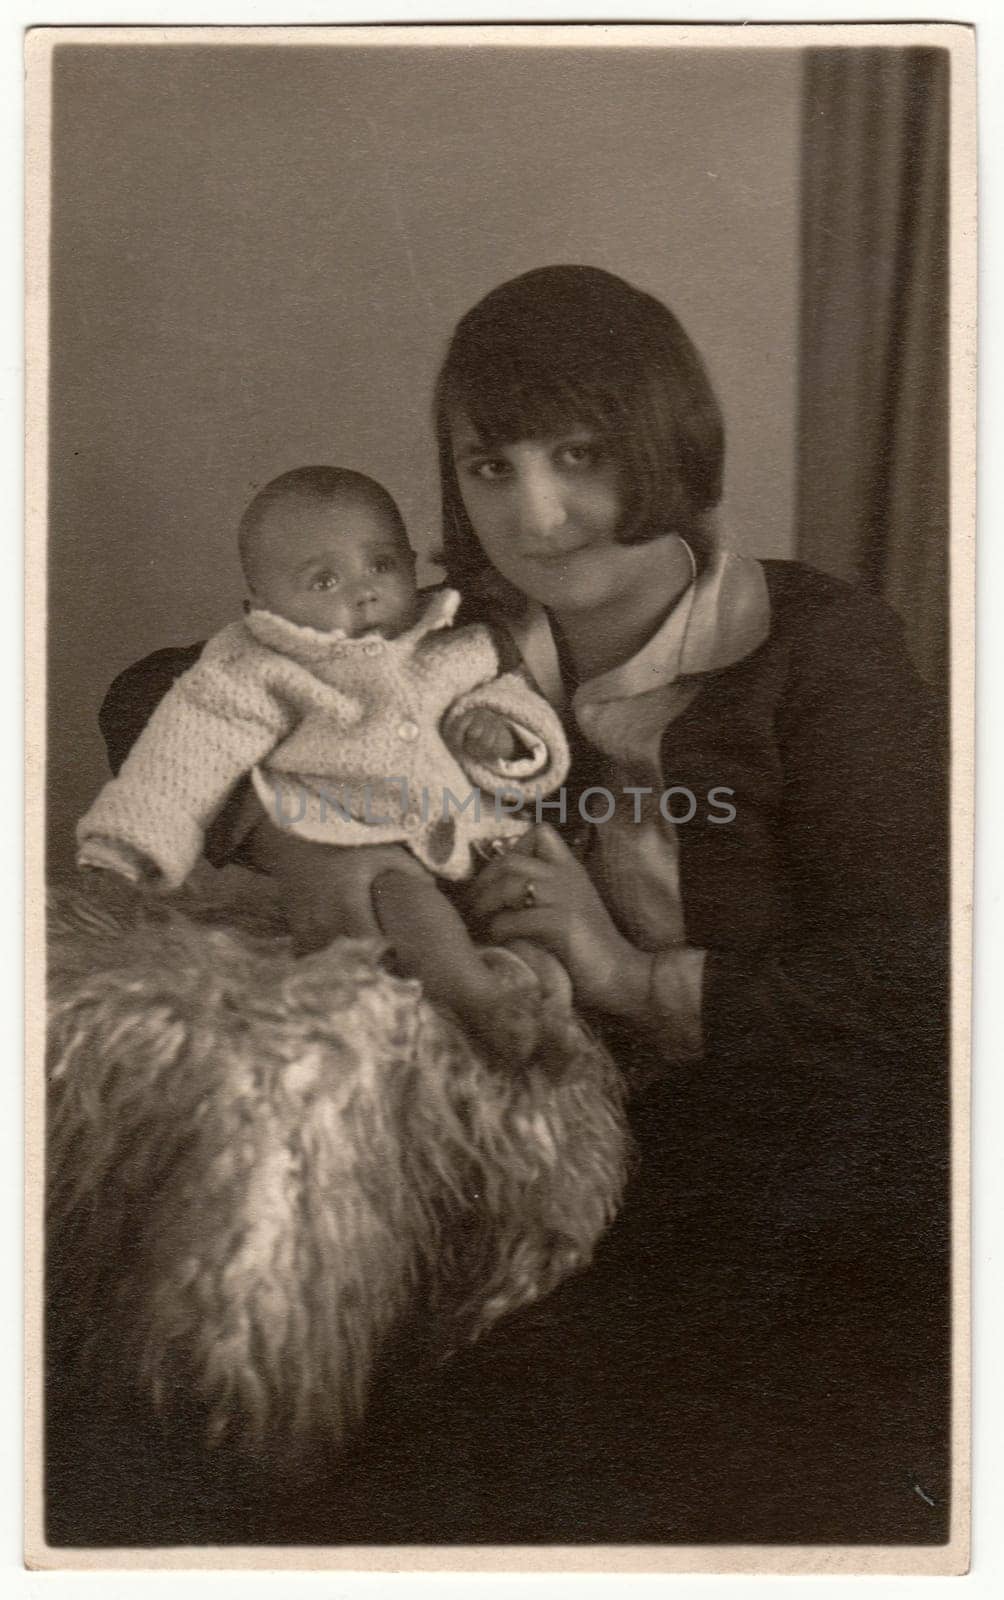 THE CZECHOSLOVAK REPUBLIC - CIRCA 1930s: Vintage photo shows woman with baby - newborn. Retro black and white studio photography.